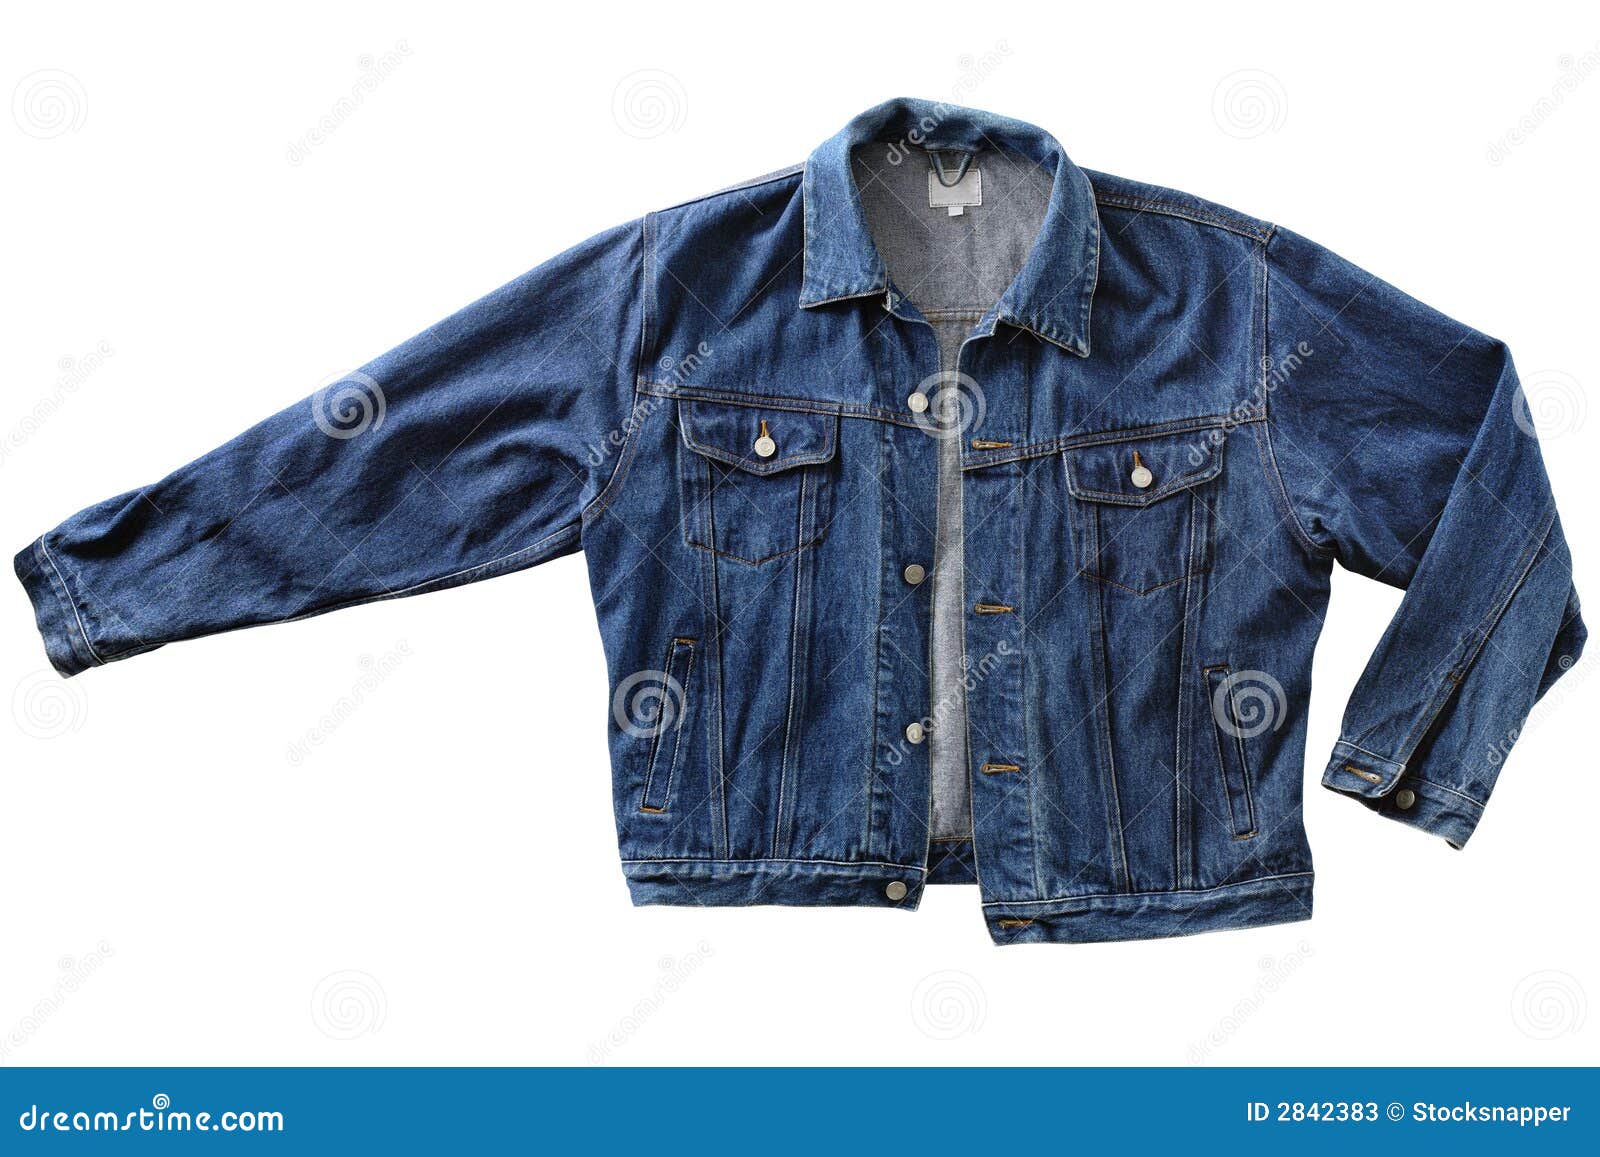 jean jacket clipart - photo #4